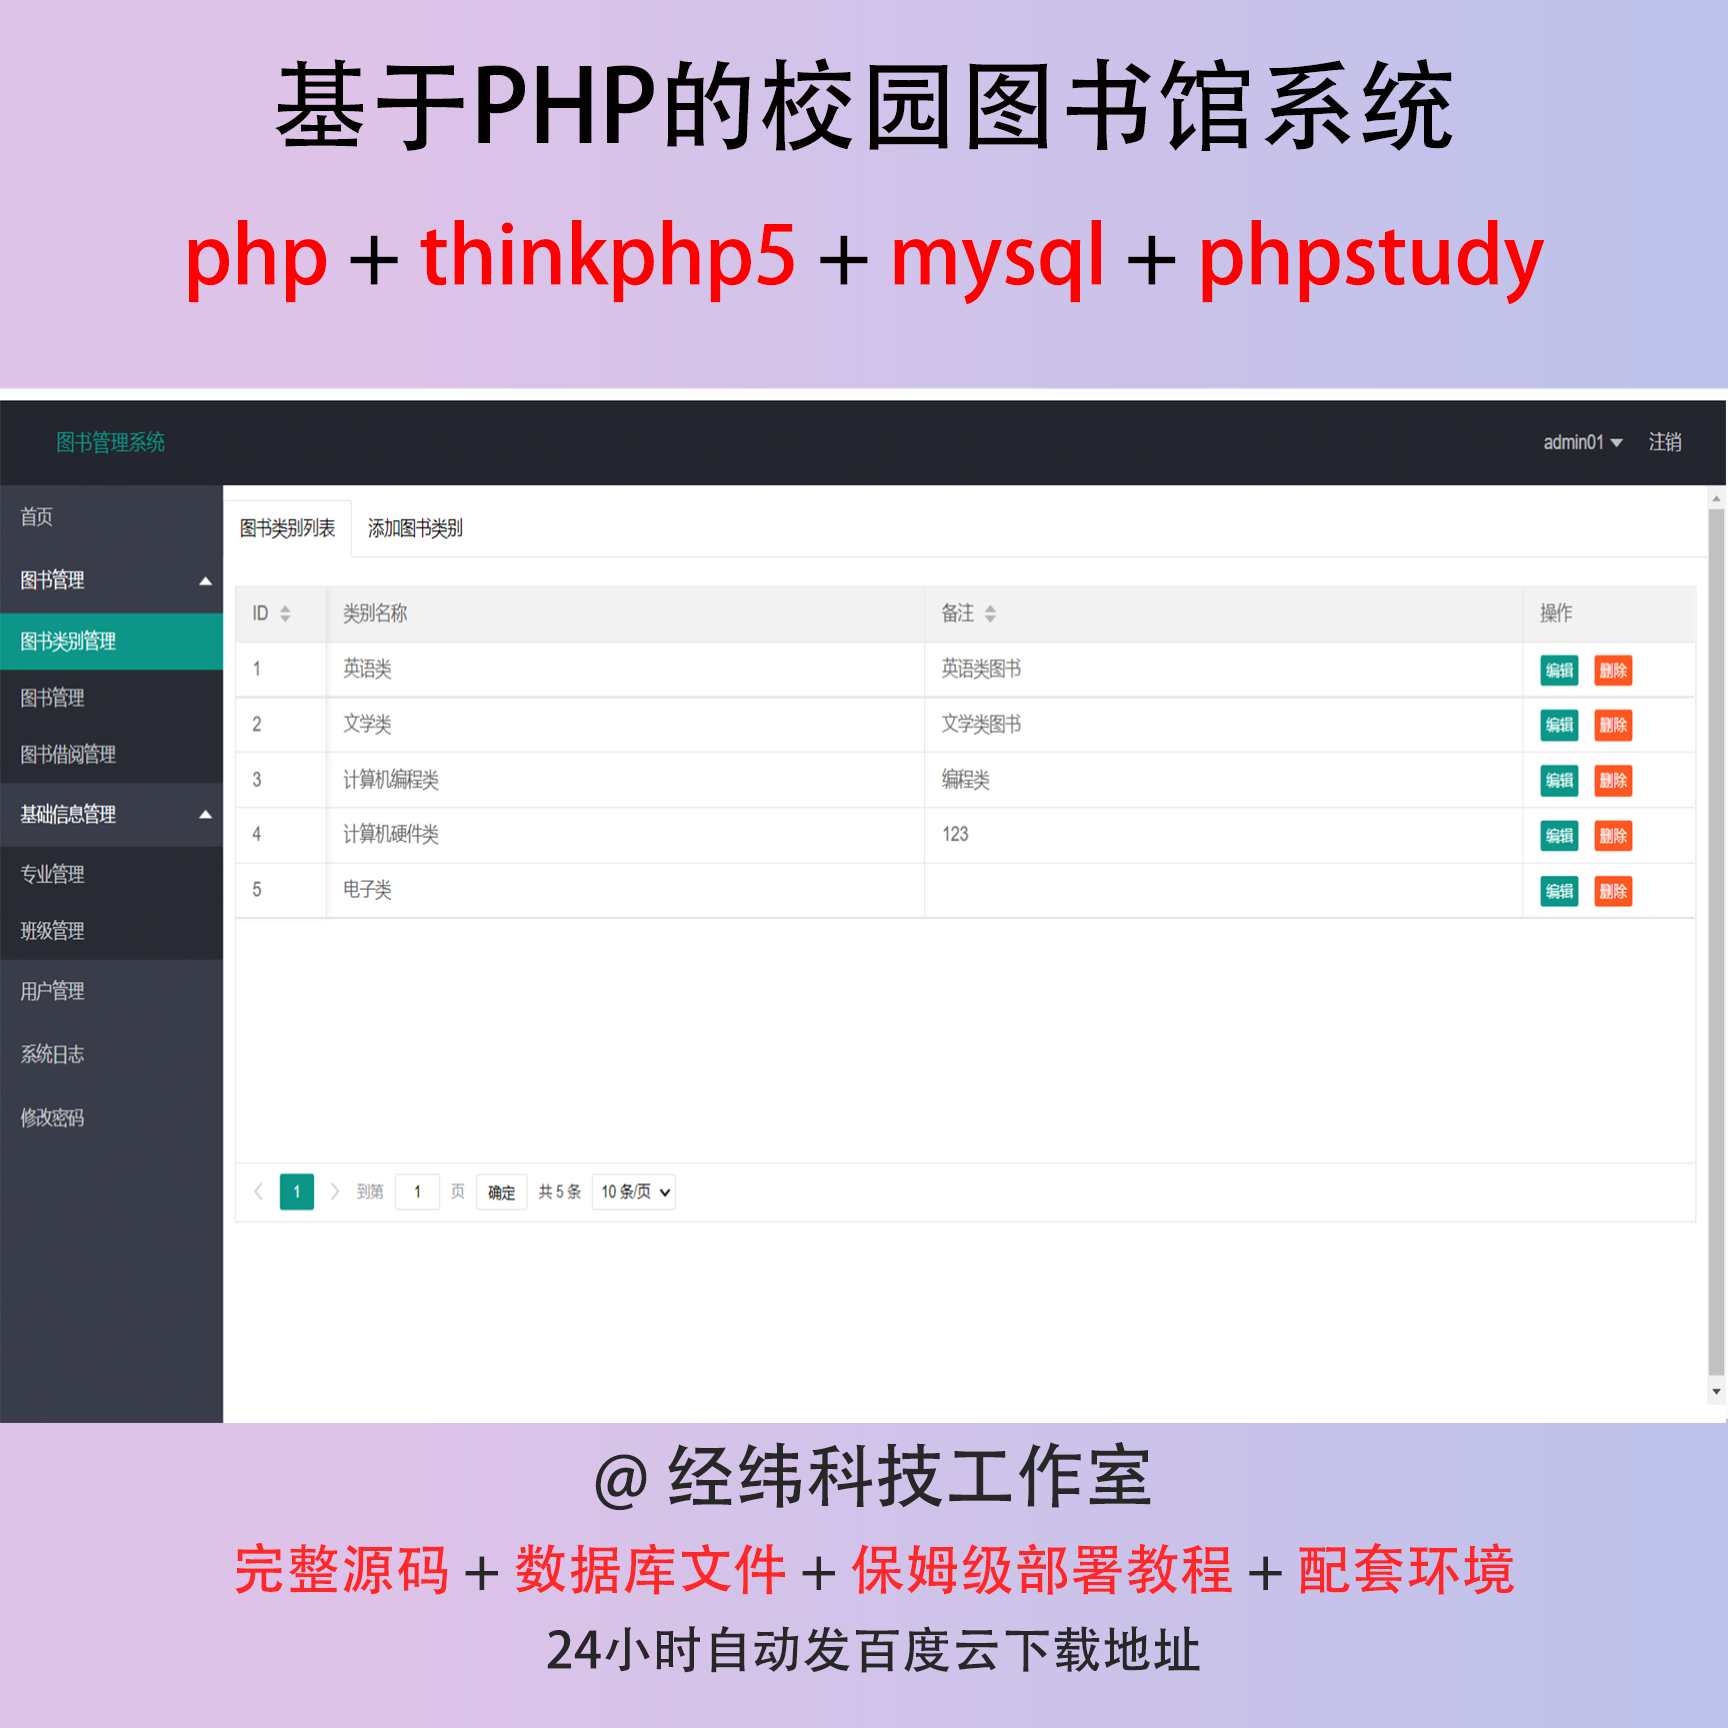 php thinkphp 5 校园图书馆管理系统在线网上平台网站程序源代码